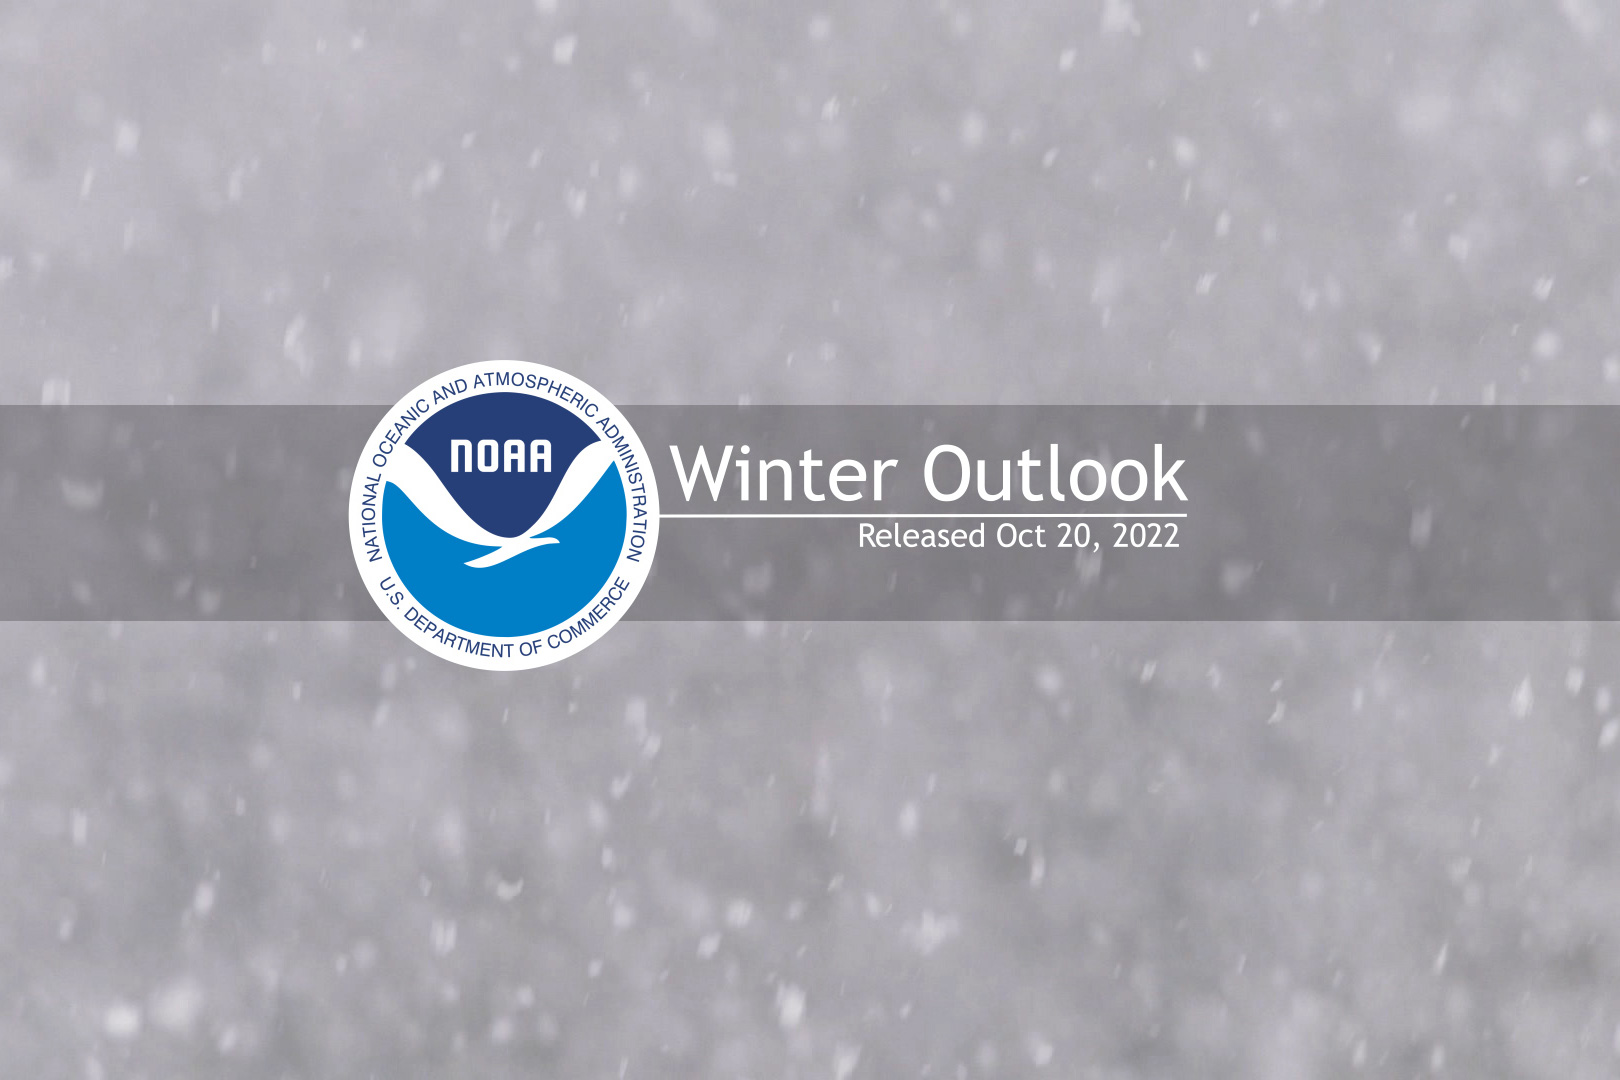 WinterOutlook2022rotator_3x2.jpg NOAA Climate.gov